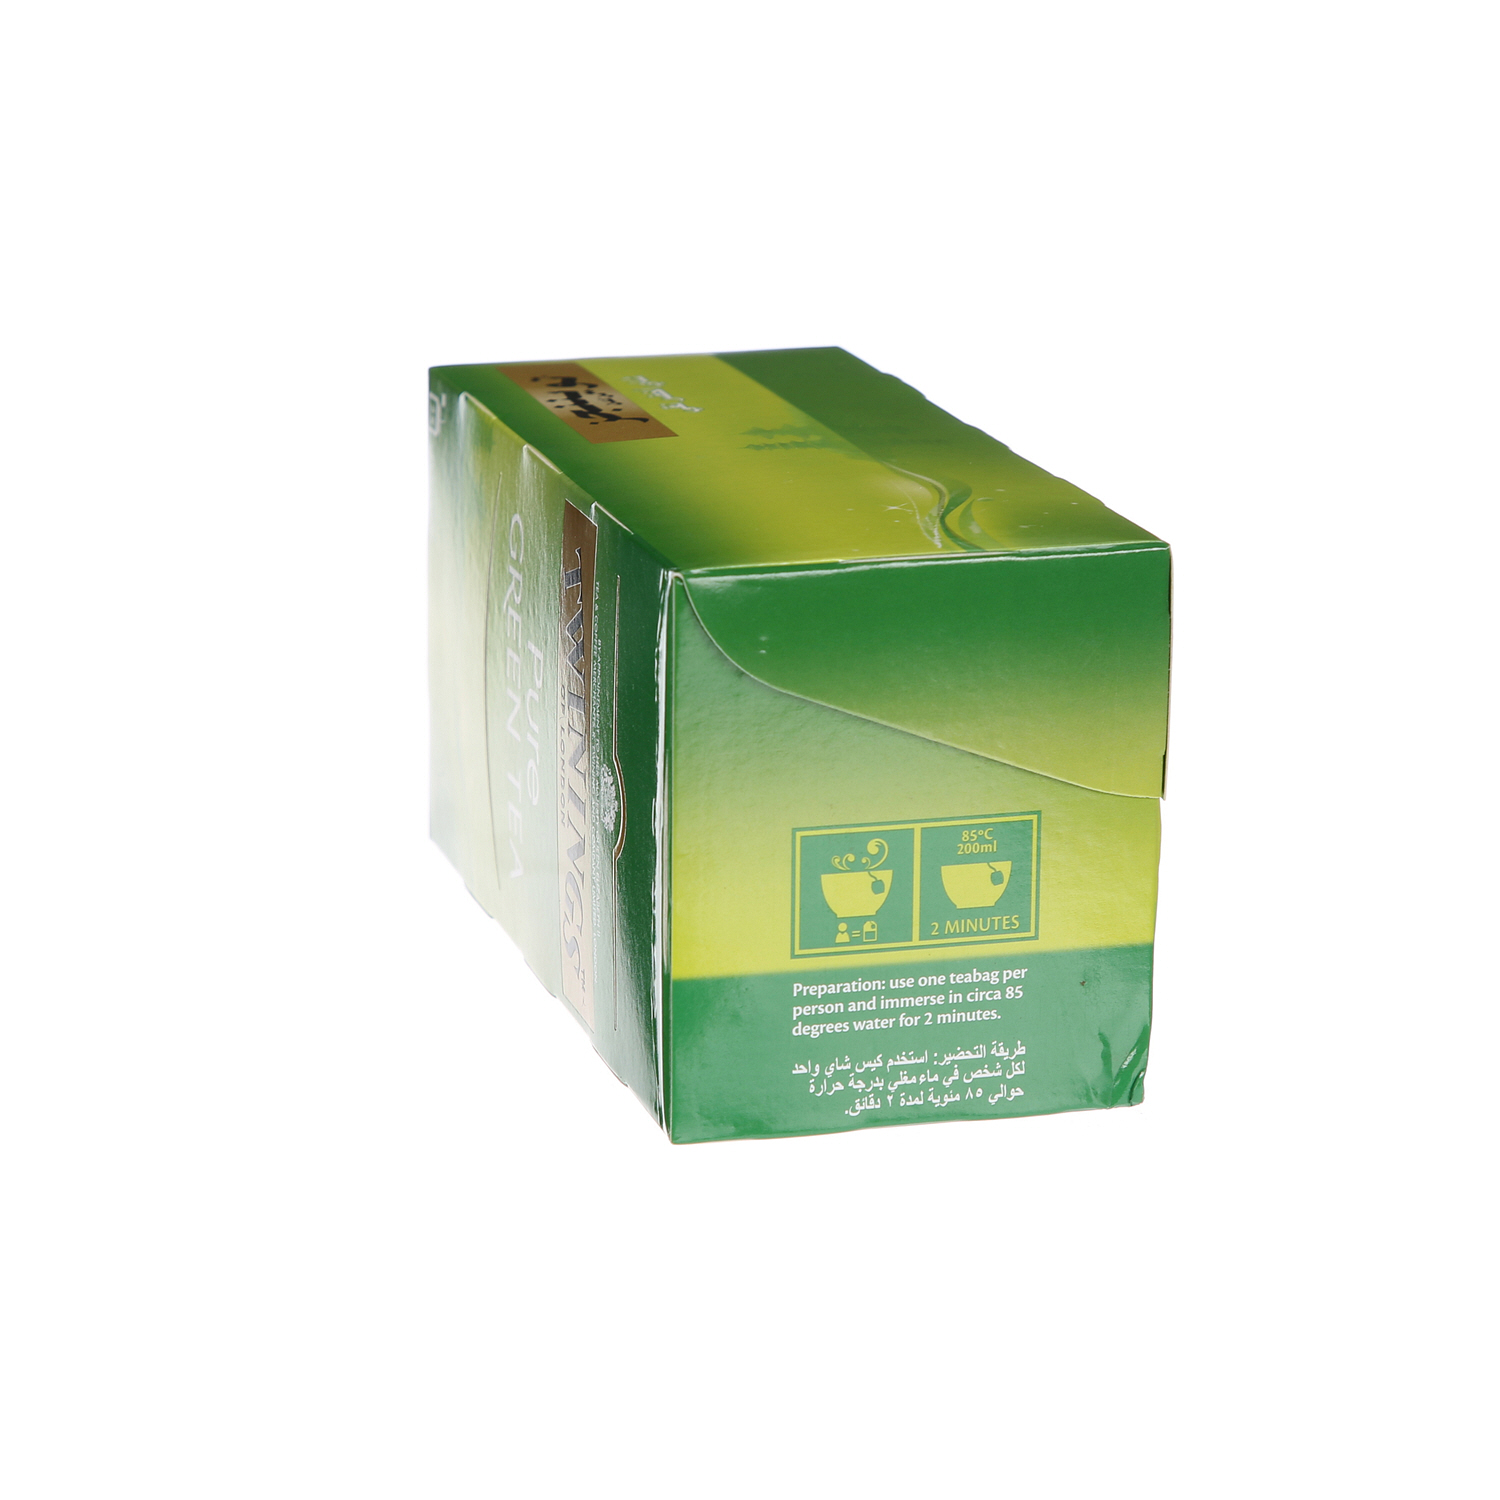 Twinings Goldline Green Tea 25 Pack